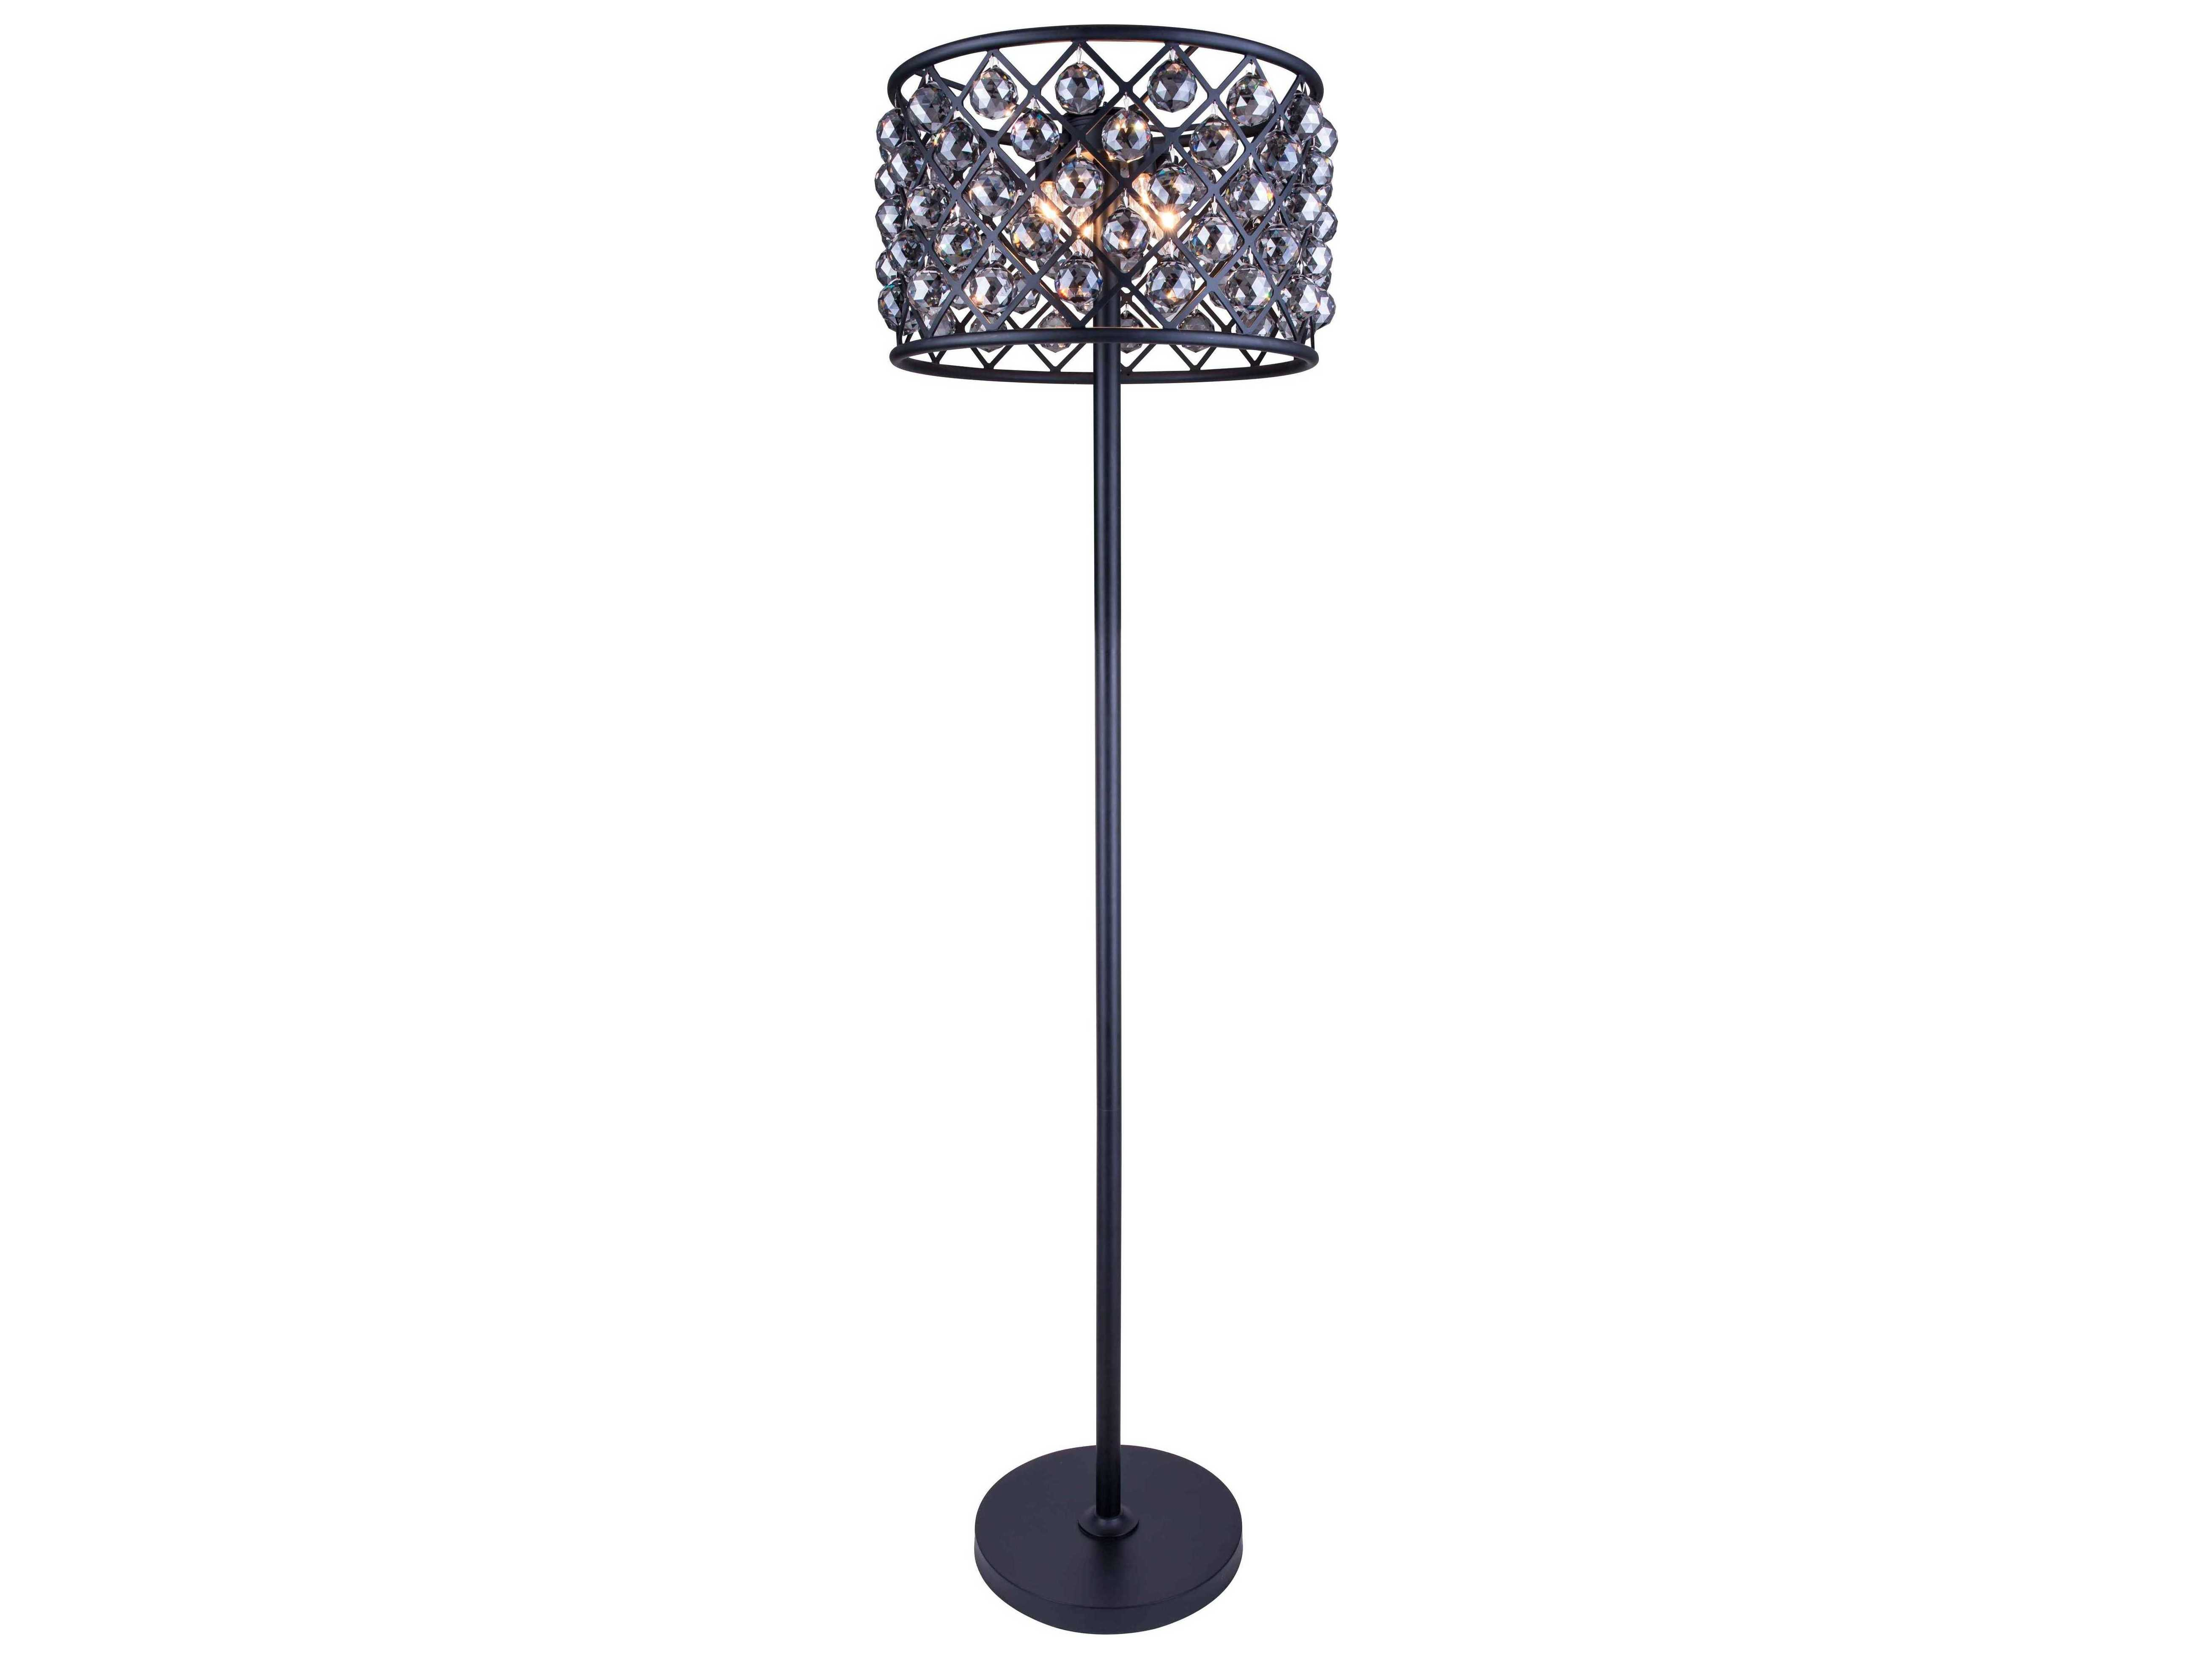 Elegant Lighting Madison Mocha Brown Silver Shade Crystal Four Lights Floor Lamp regarding size 5230 X 3923